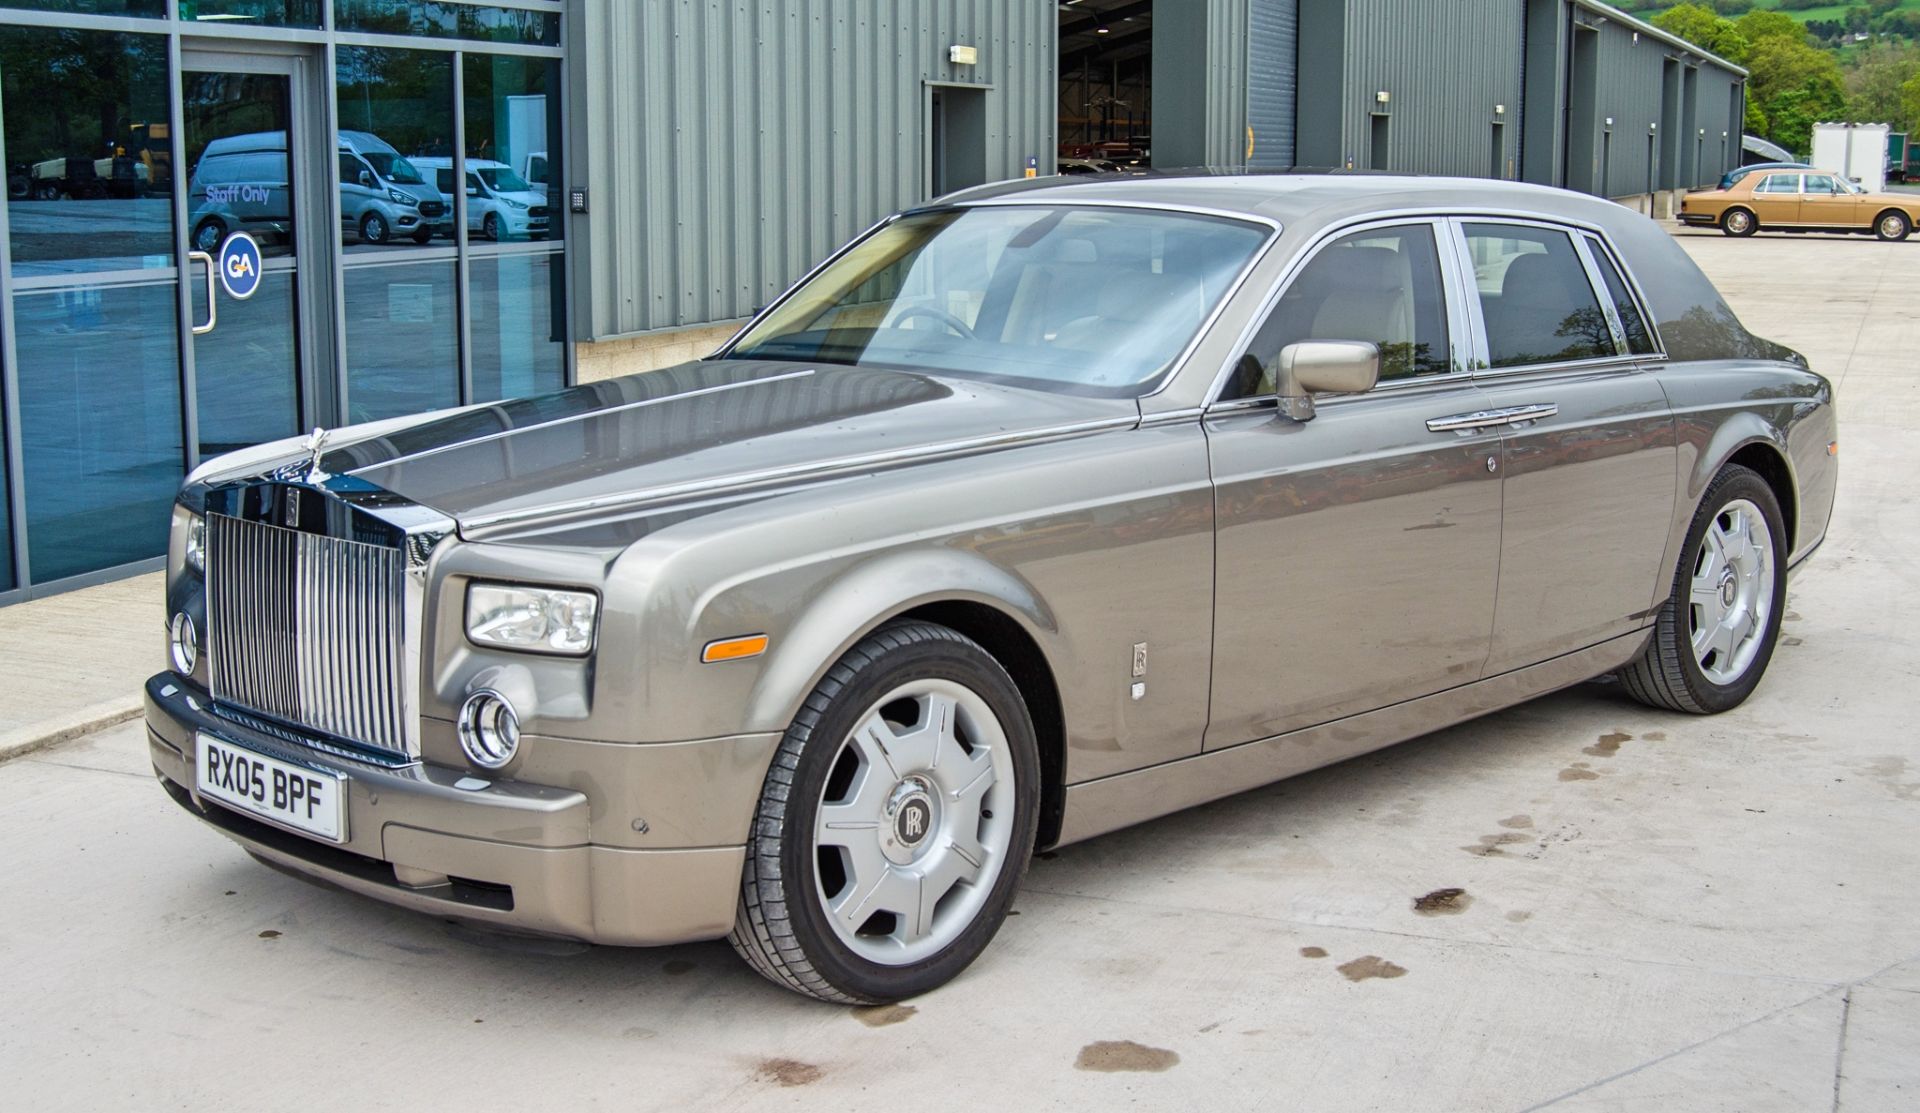 2005 Rolls Royce Phantom 6749cc V12 Auto 4 door saloon car - Image 4 of 53